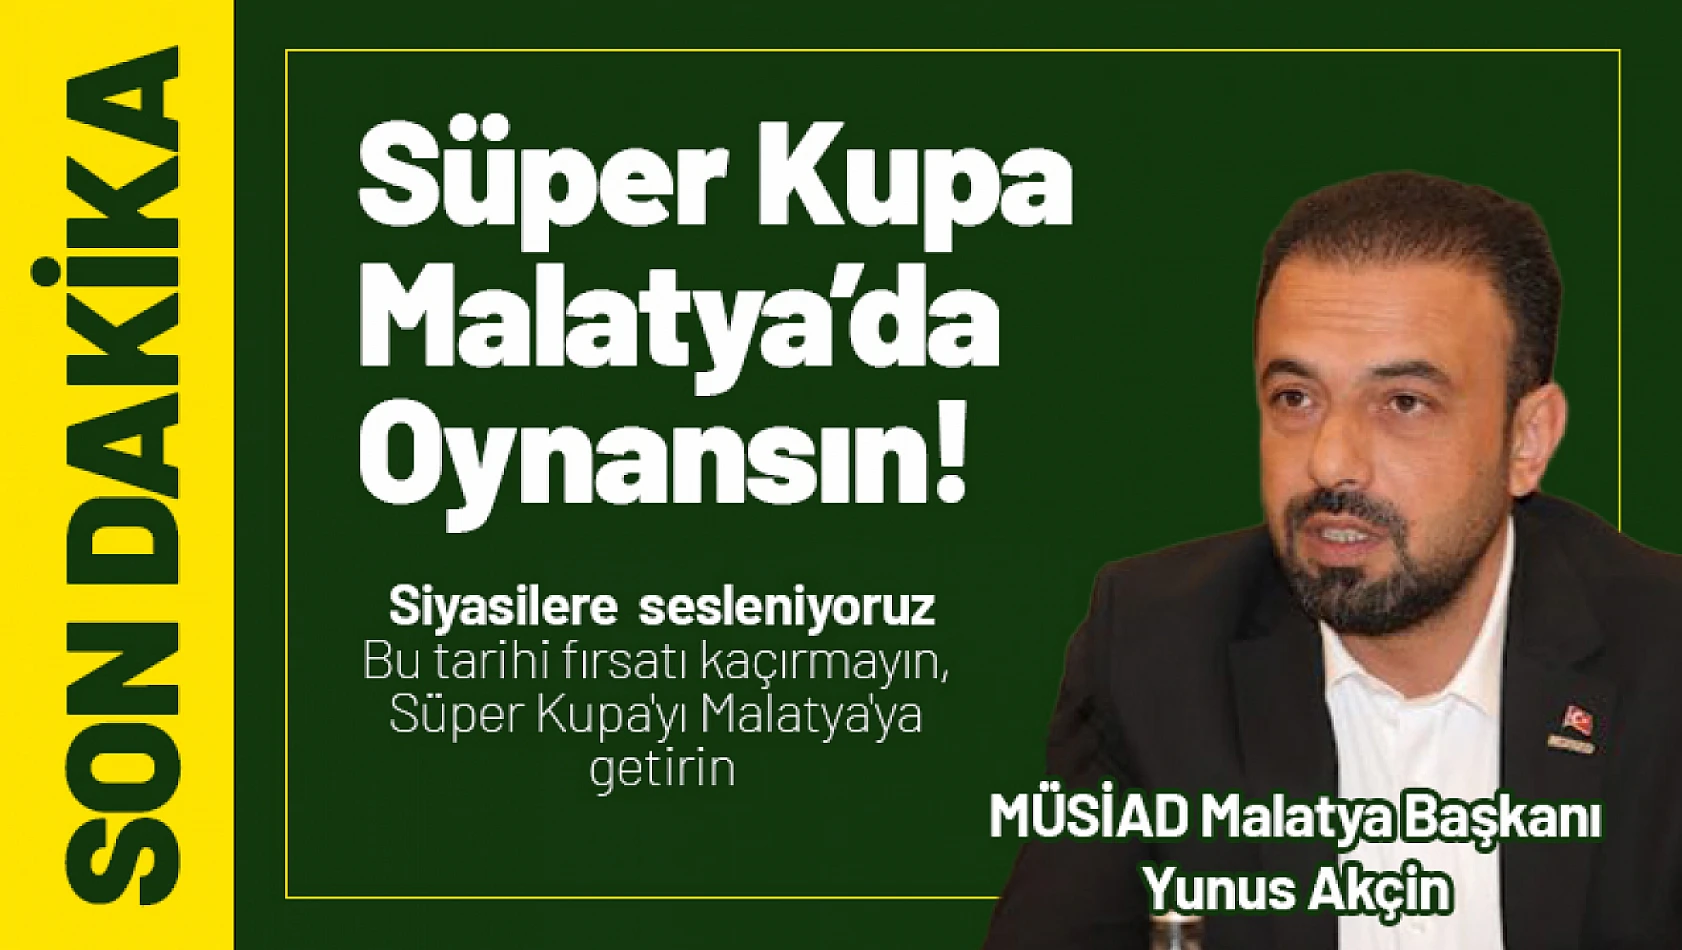 Yunus Akçin: Süper Kupa Malatya'da oynansın!